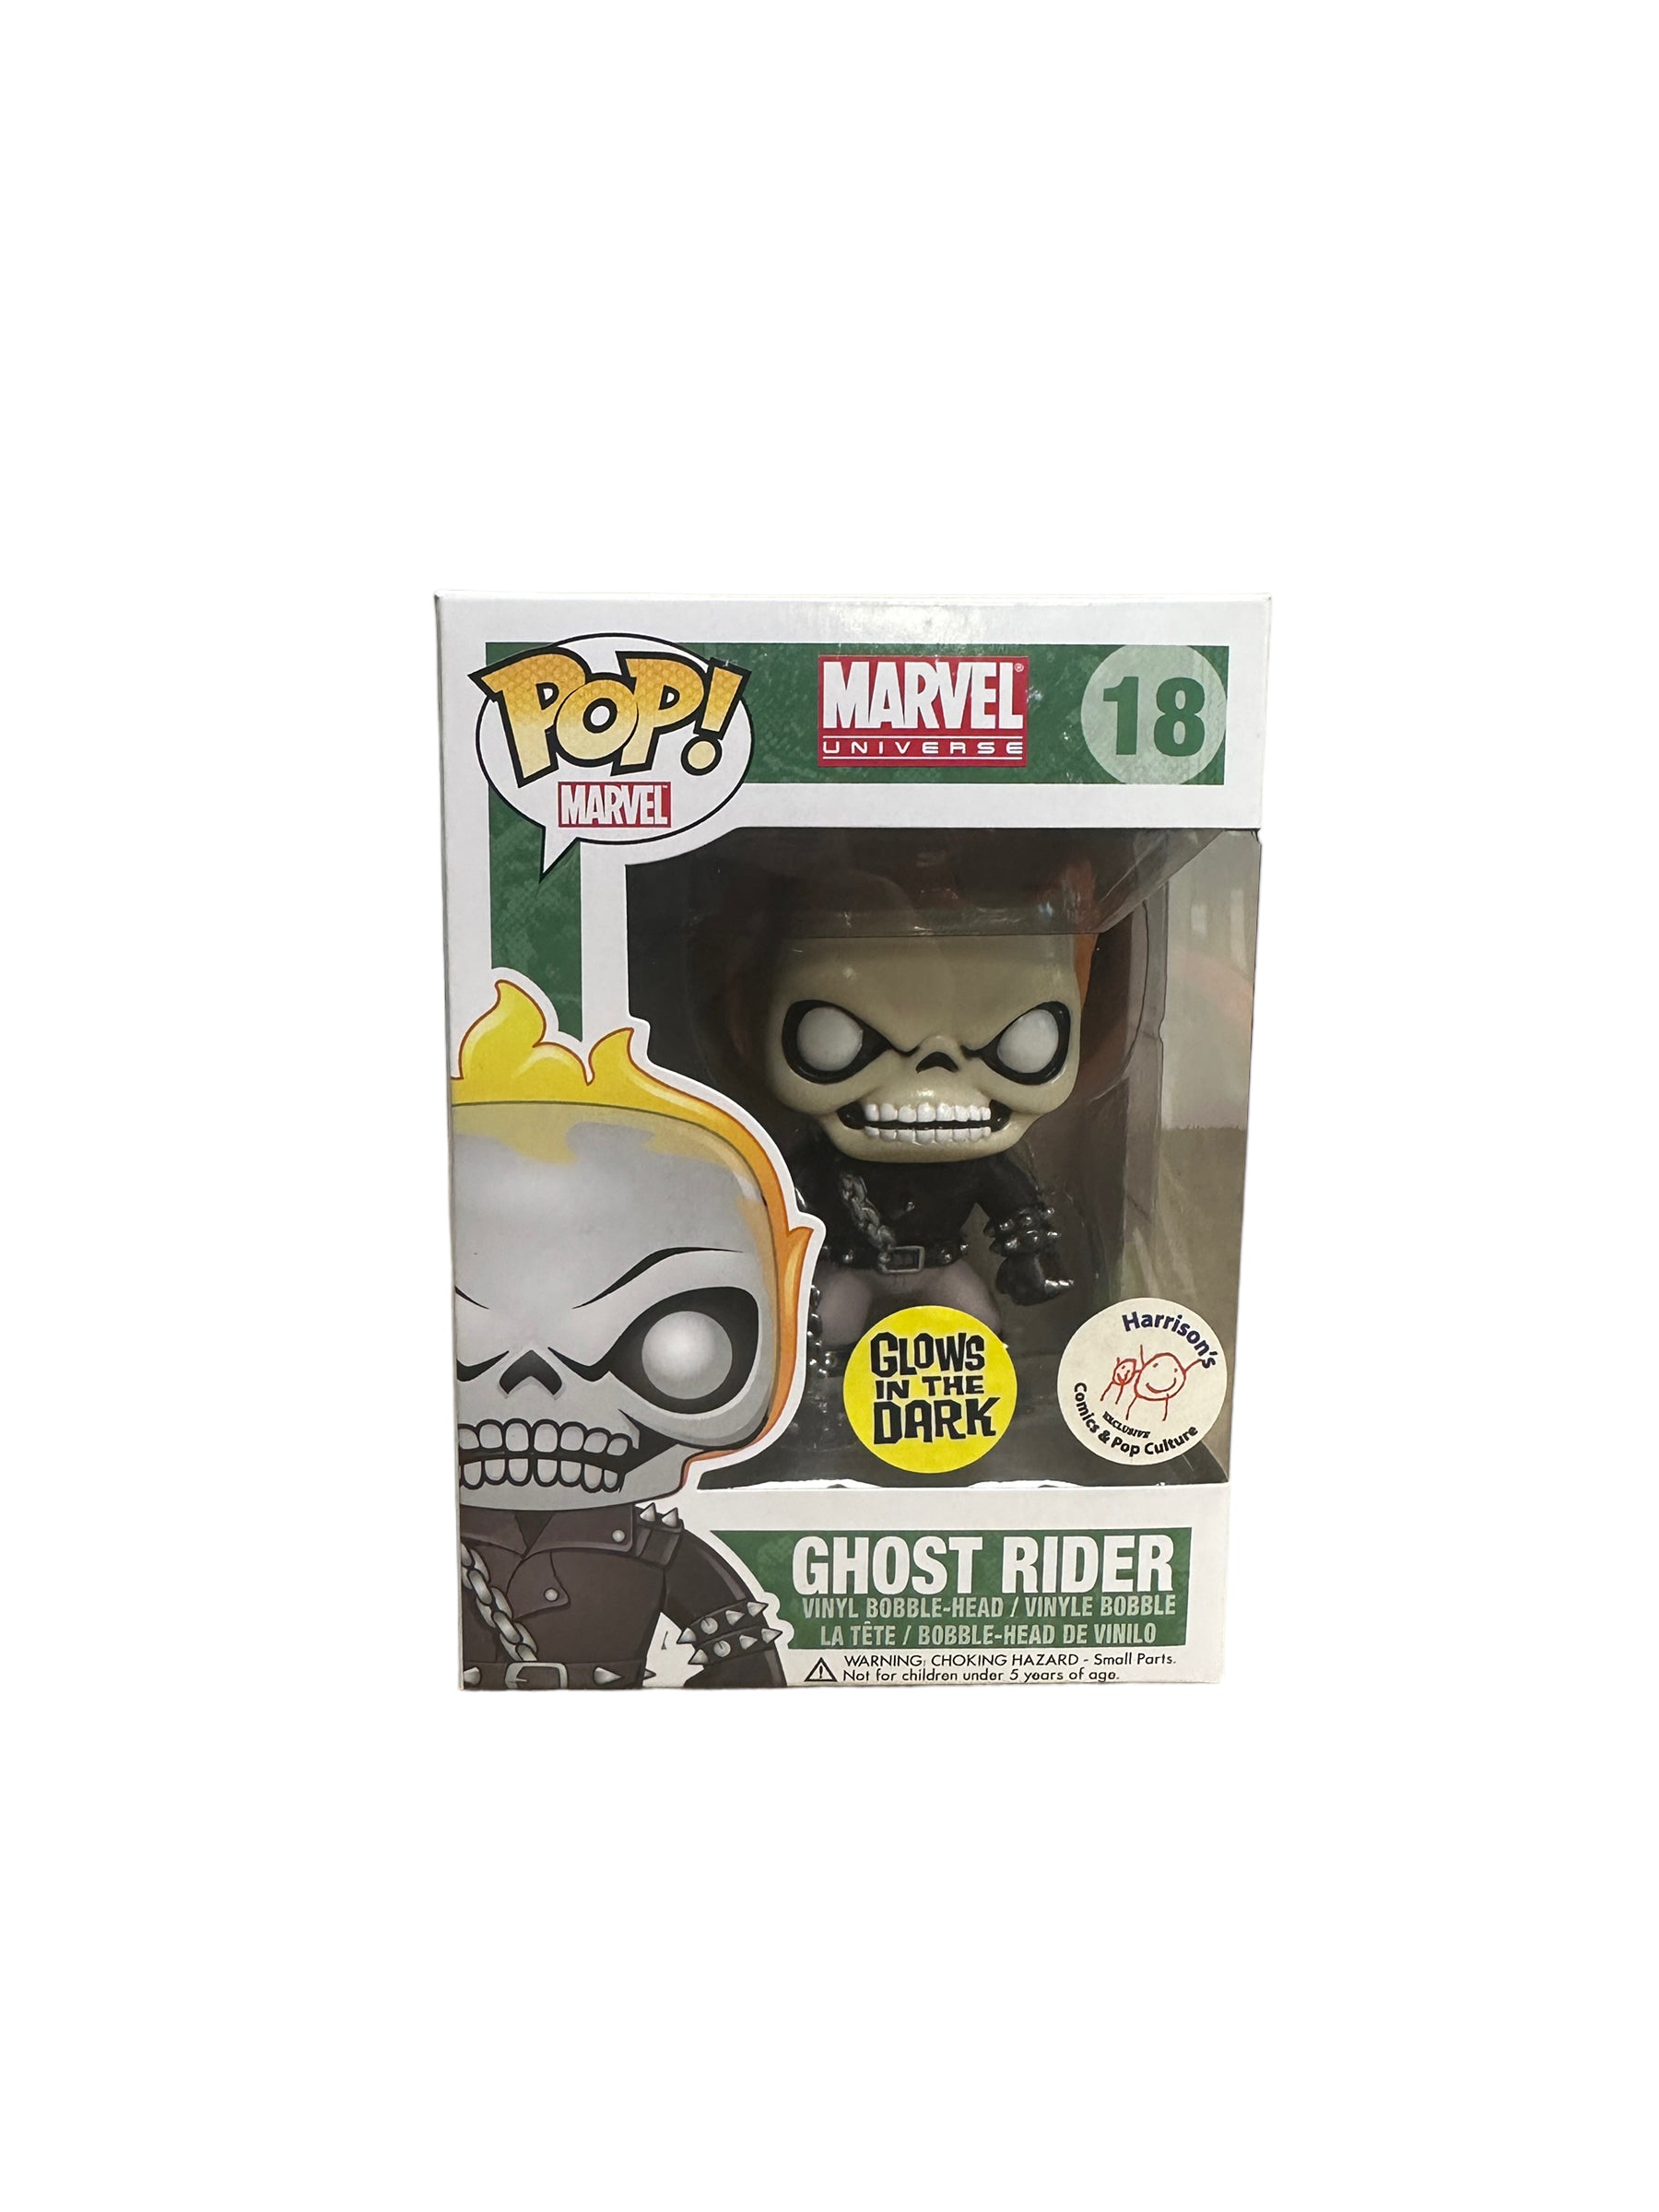 Ghost Rider #18 (Glows in the Dark) Funko Pop! - Marvel Universe - Harrison's Comics & Pop Culture Exclusive - Condition 8.75/10